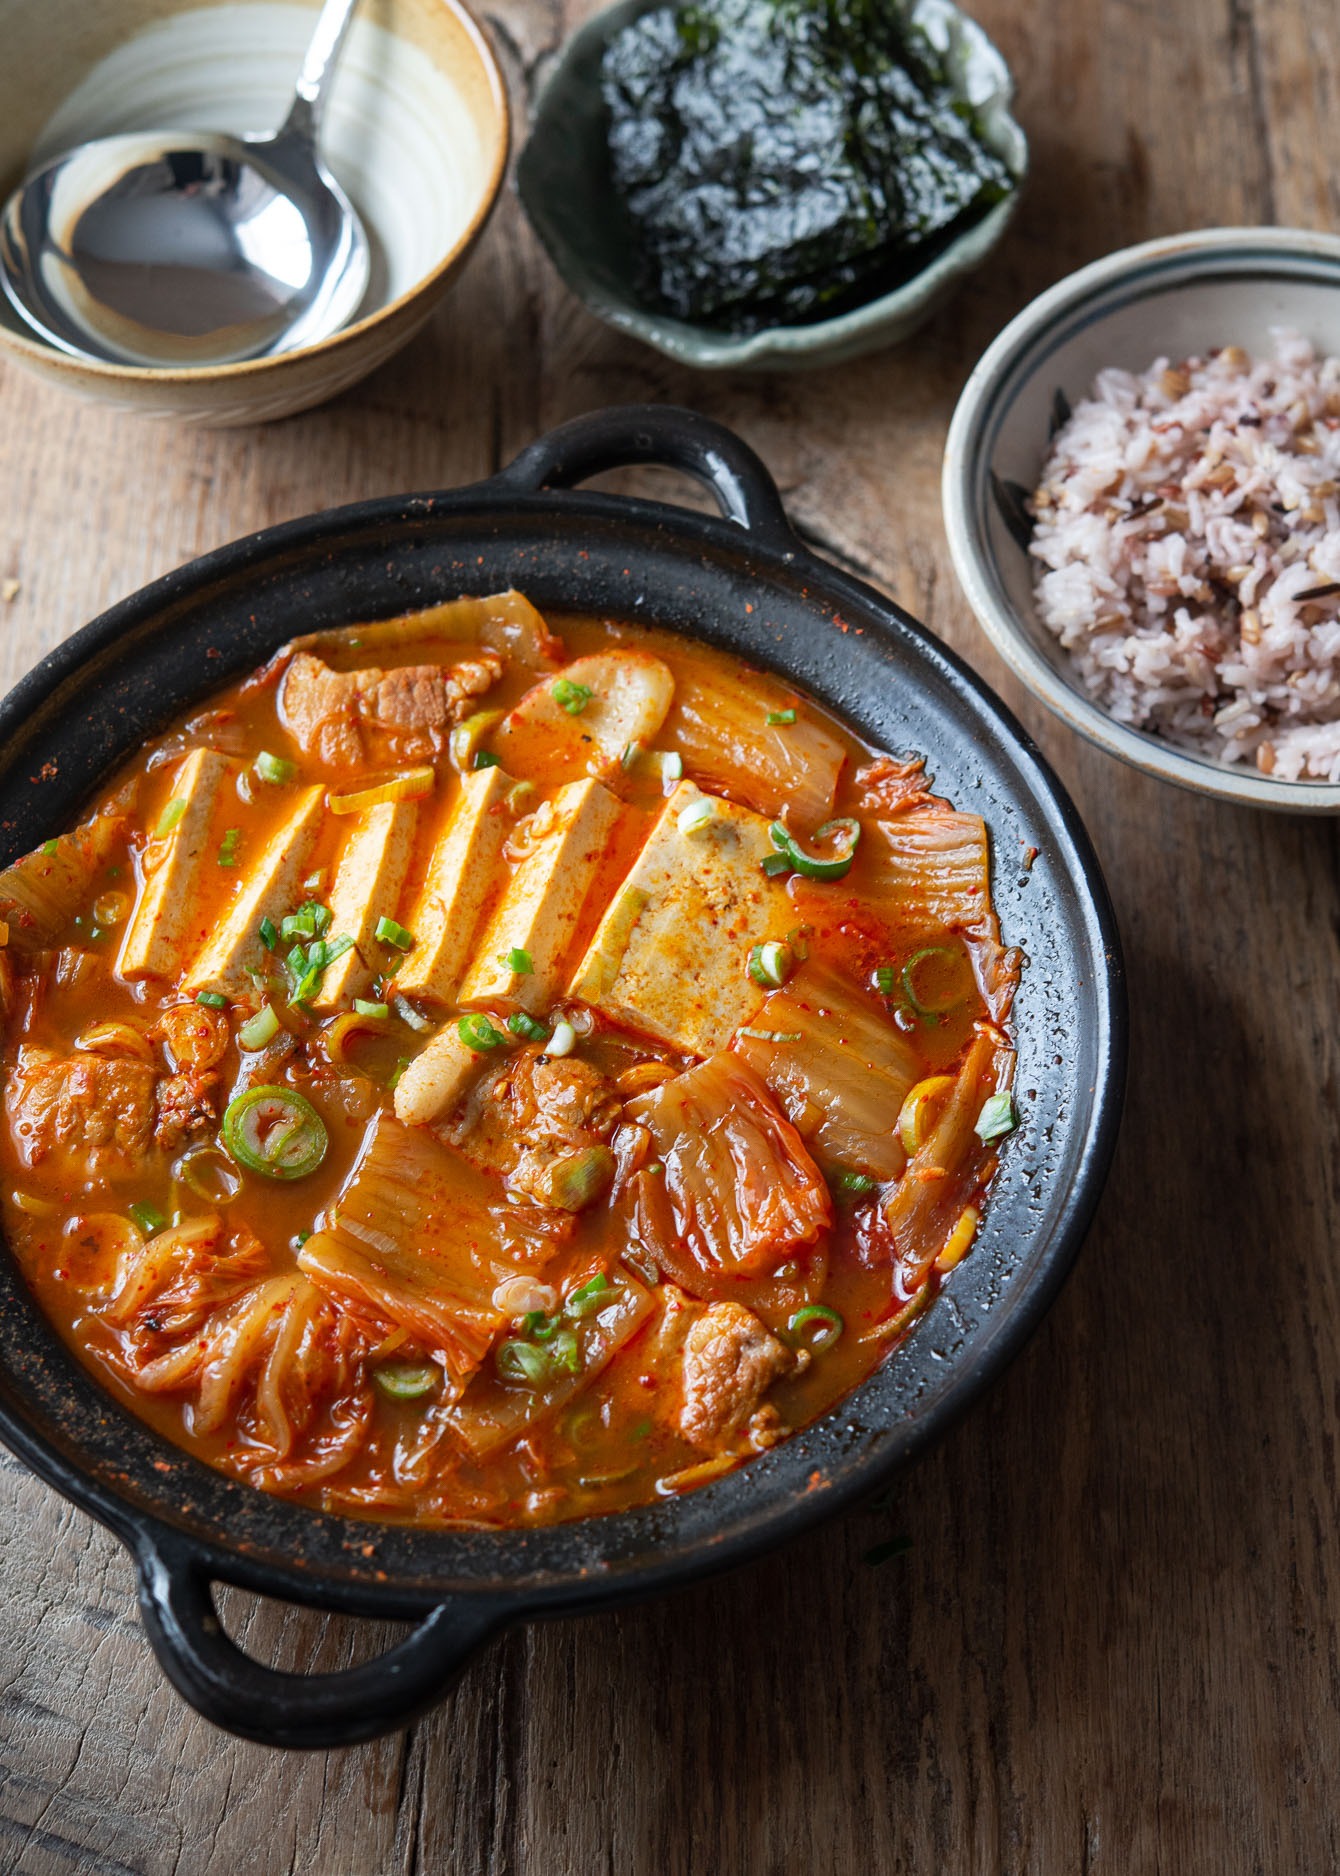 Kimchi stew made with pork and tofu, a classic kimchi jjigae.